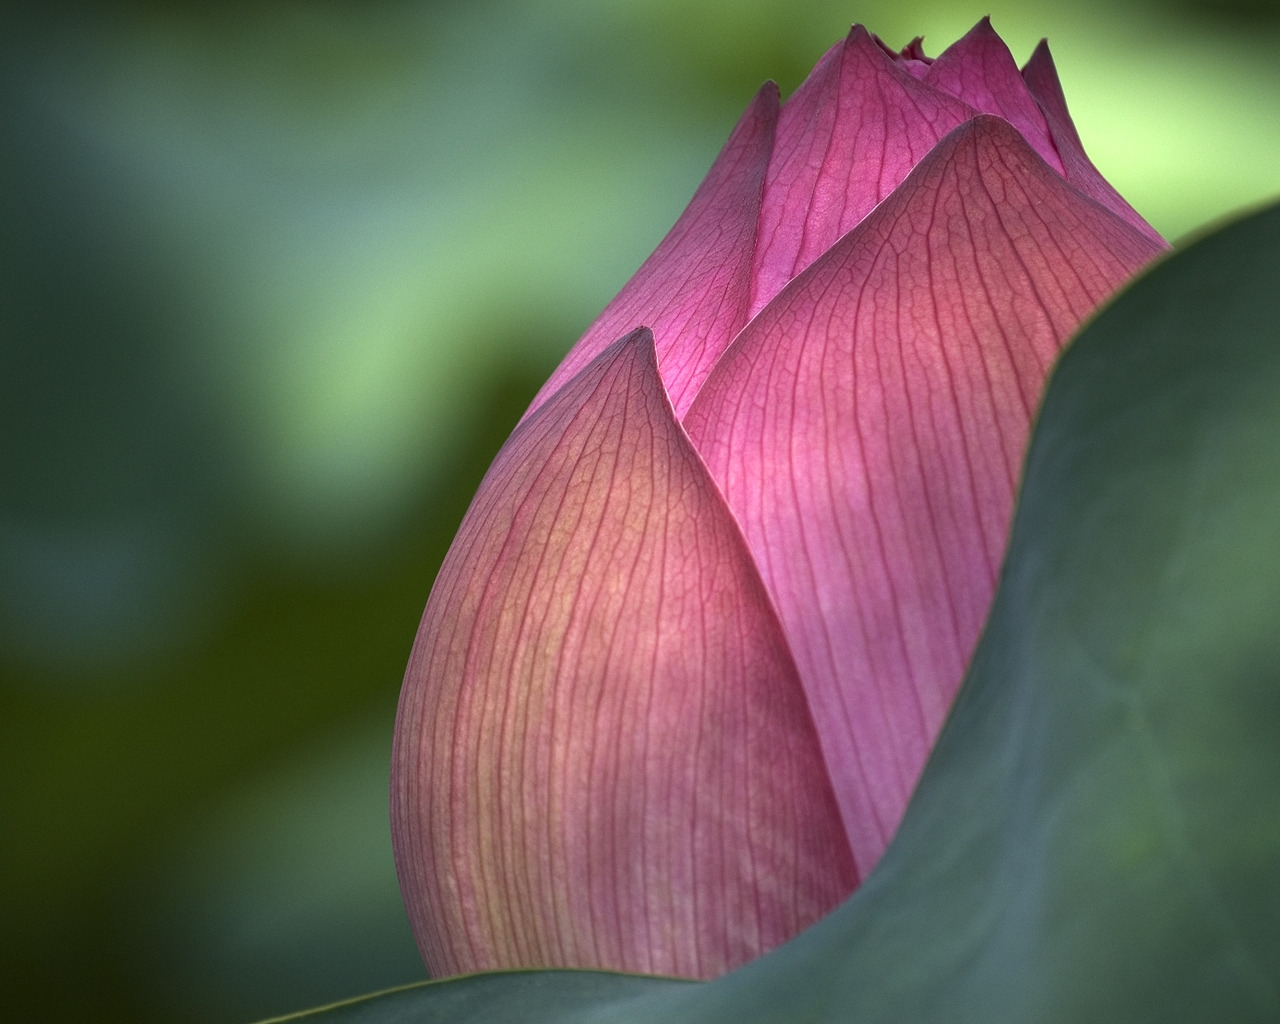 Lotus Flower for 1280 x 1024 resolution